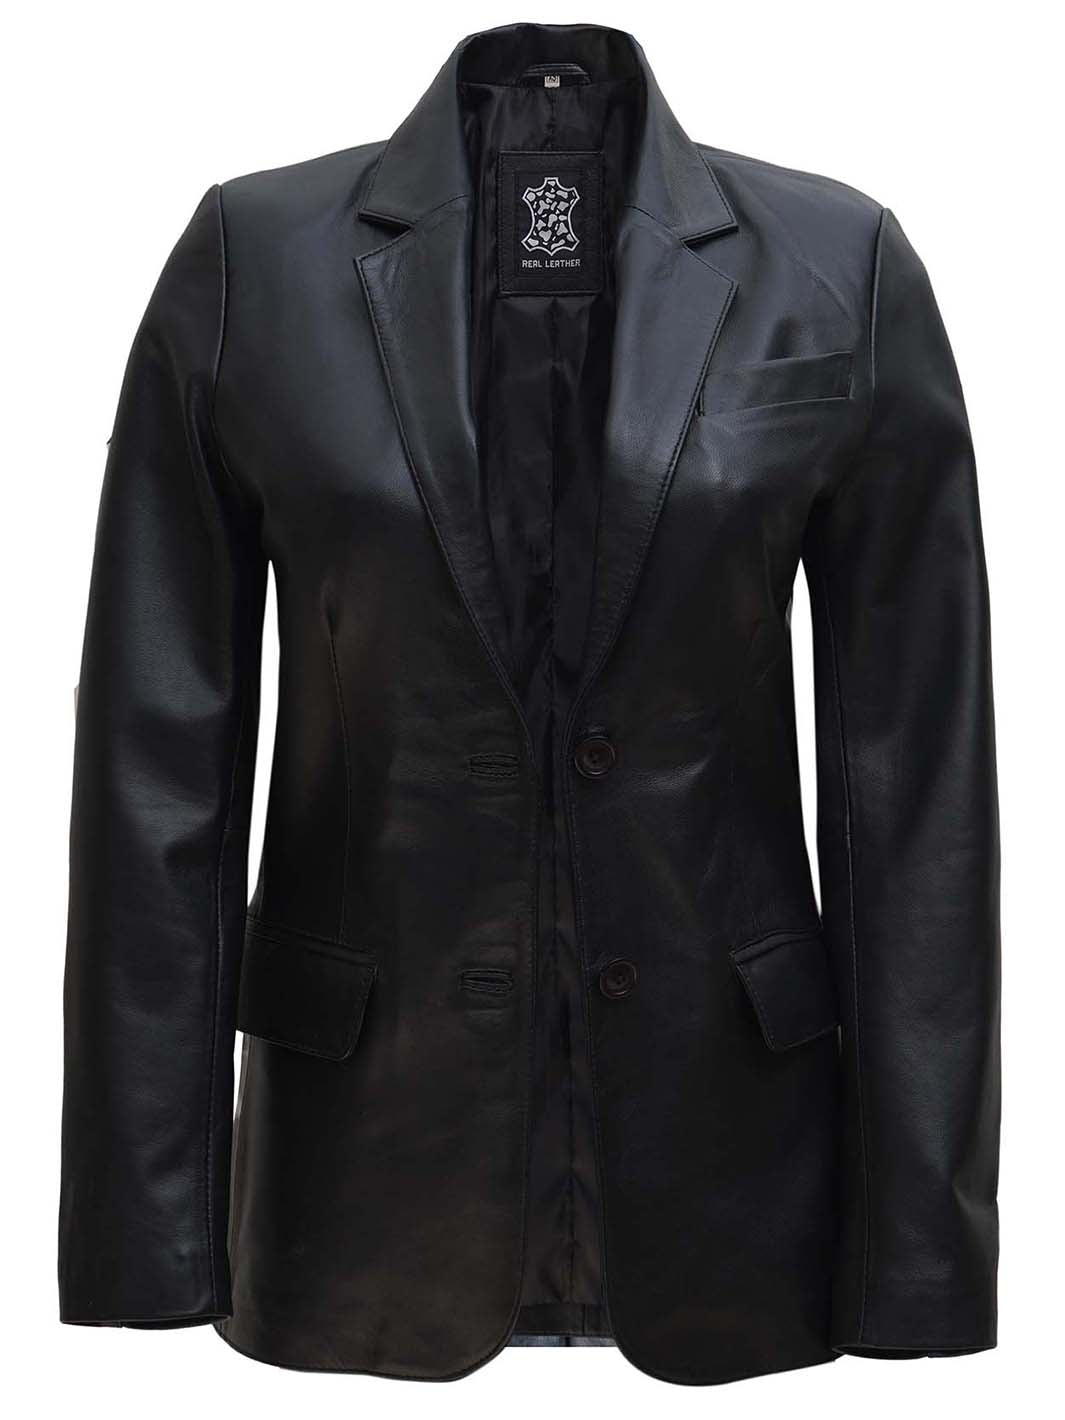 Womens Two Button Black Leather Blazer Jacket